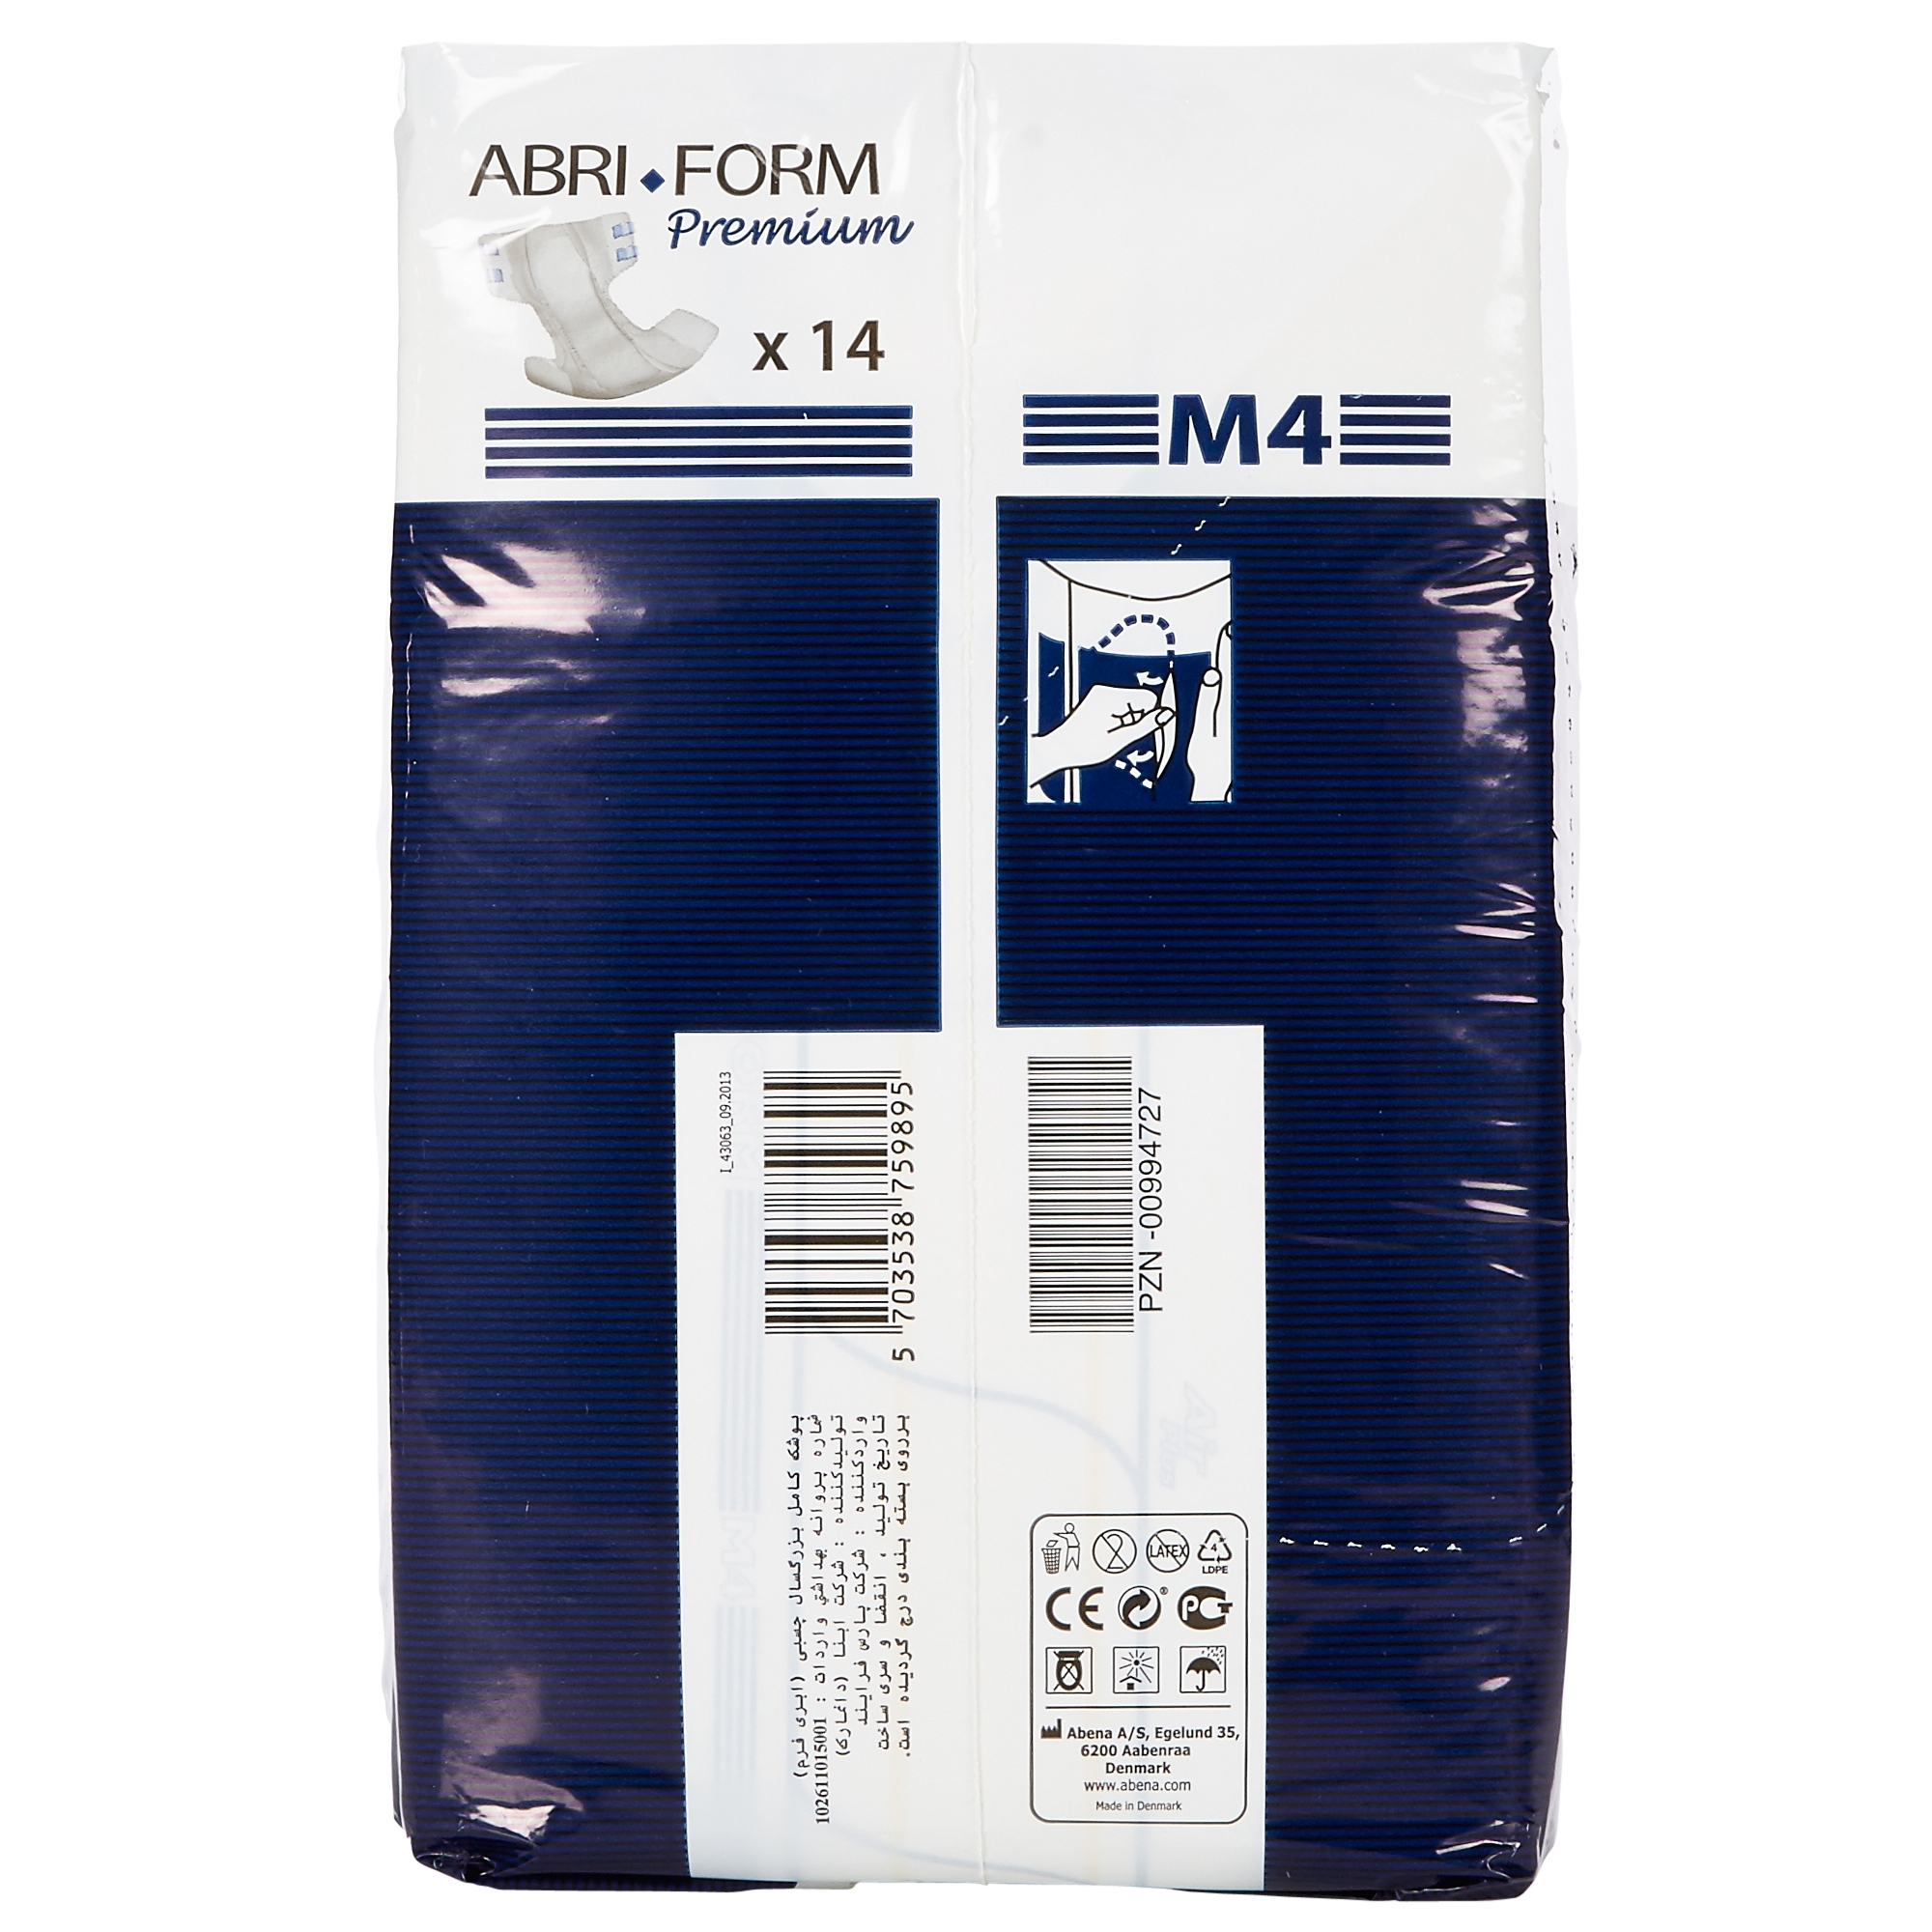 Abena Abri-Form Premium Incontinence Briefs, Medium, M4, 56 Count (4 Packs of 14) - image 4 of 6